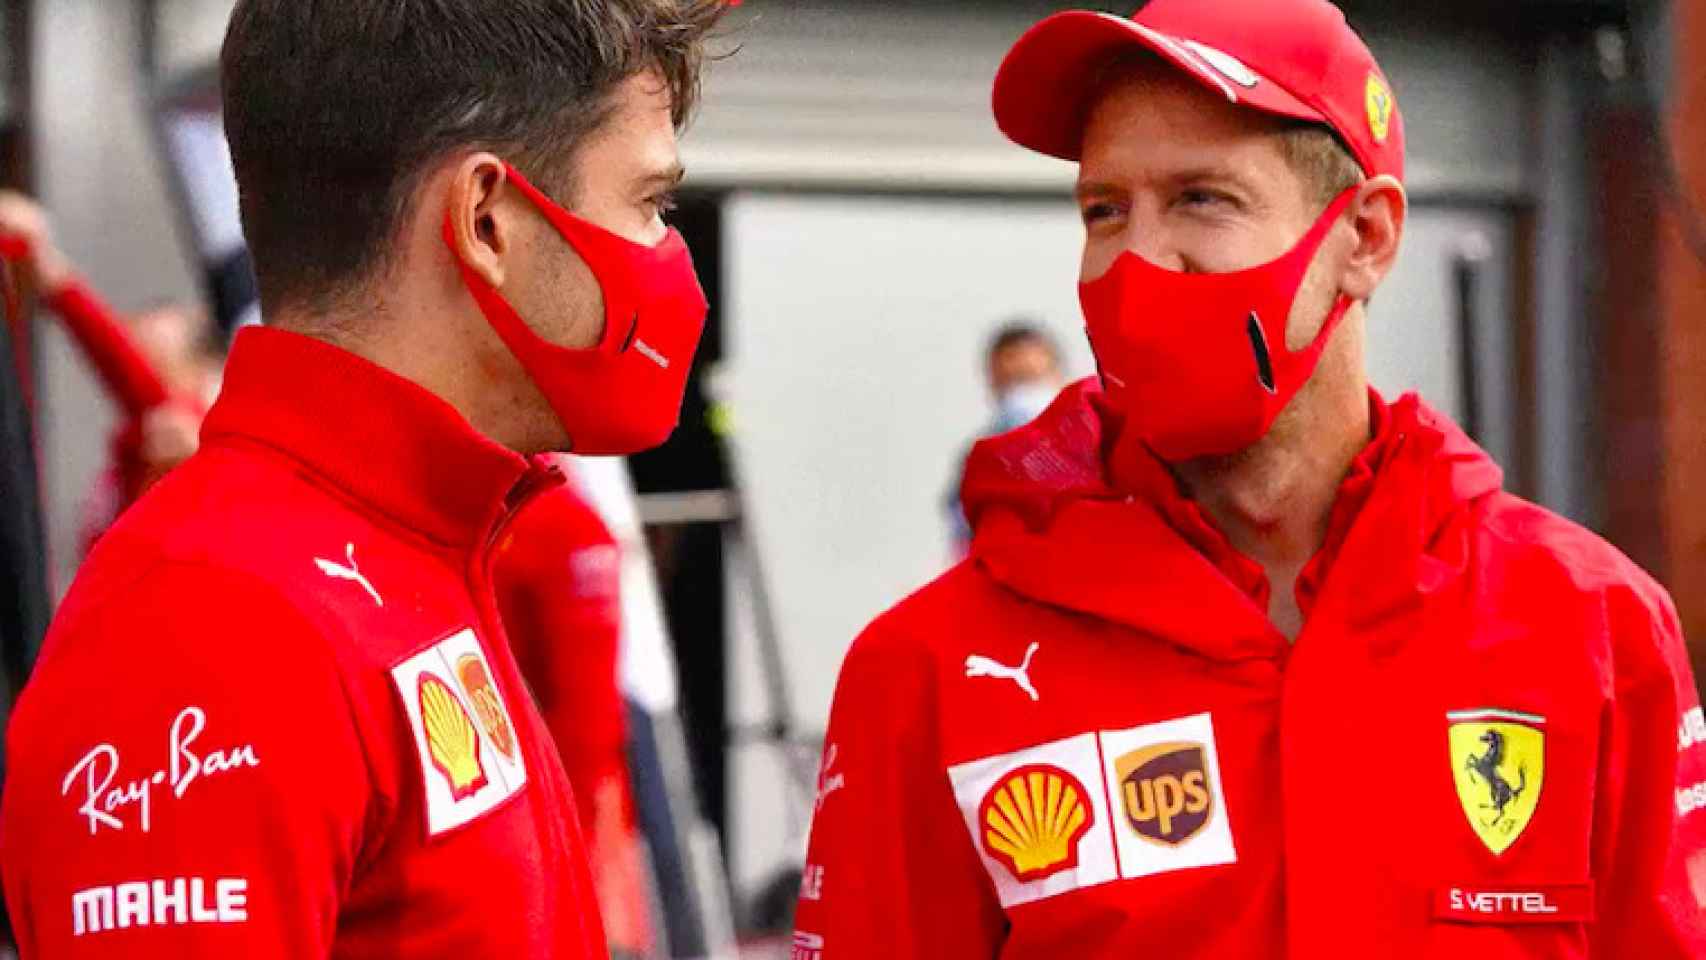 Leclerc y Vettel charlan amigablemente